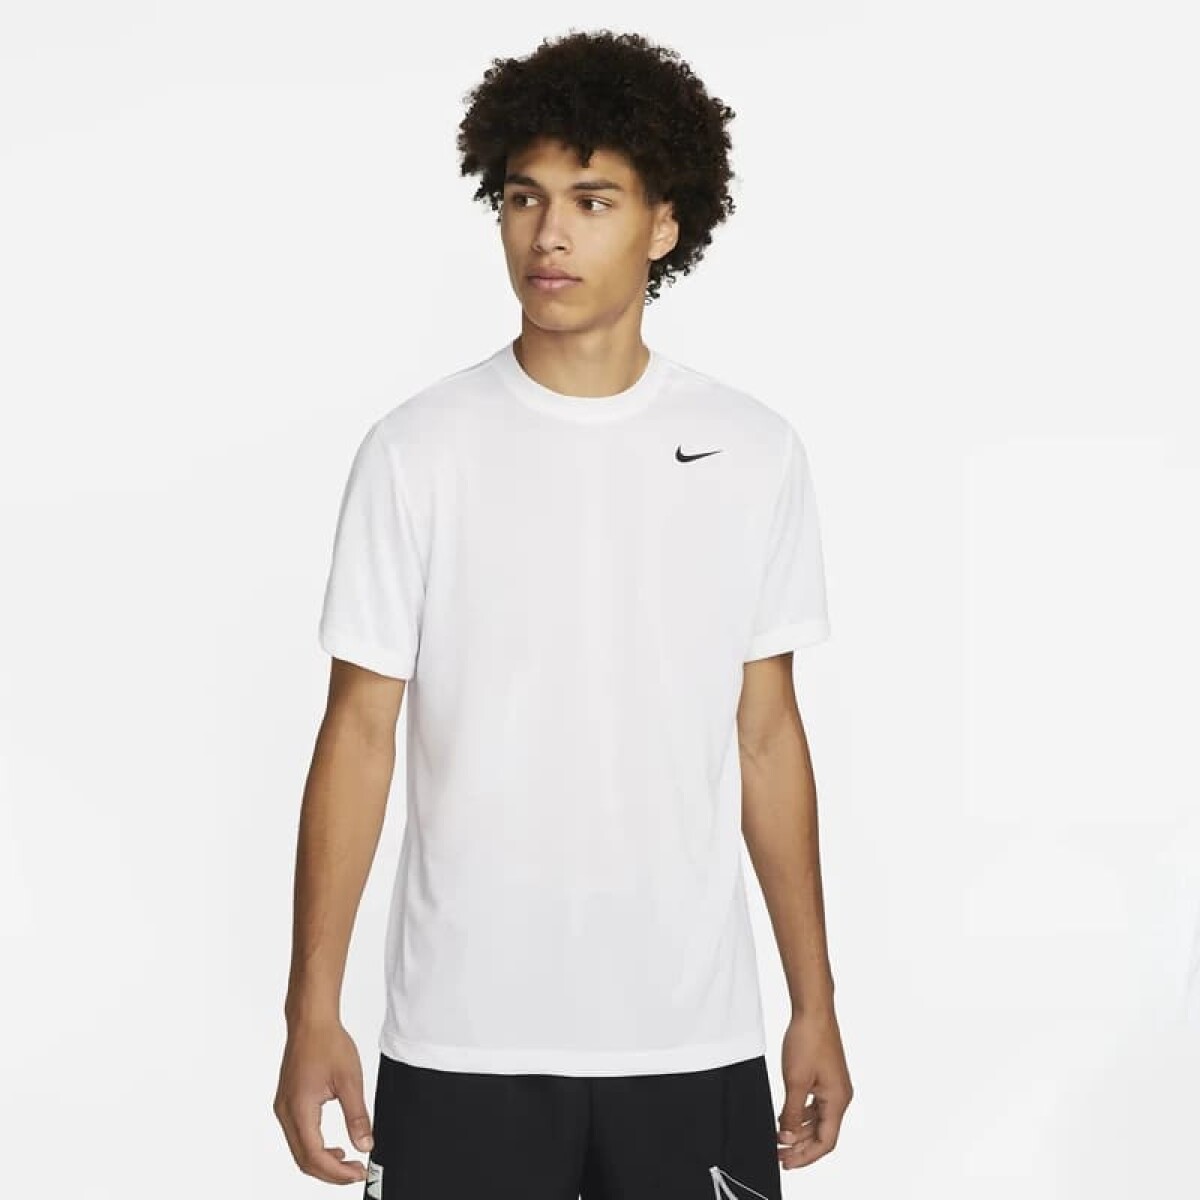 Remera Nike Training Hombre Df Tee Rlgd Reset White - S/C 